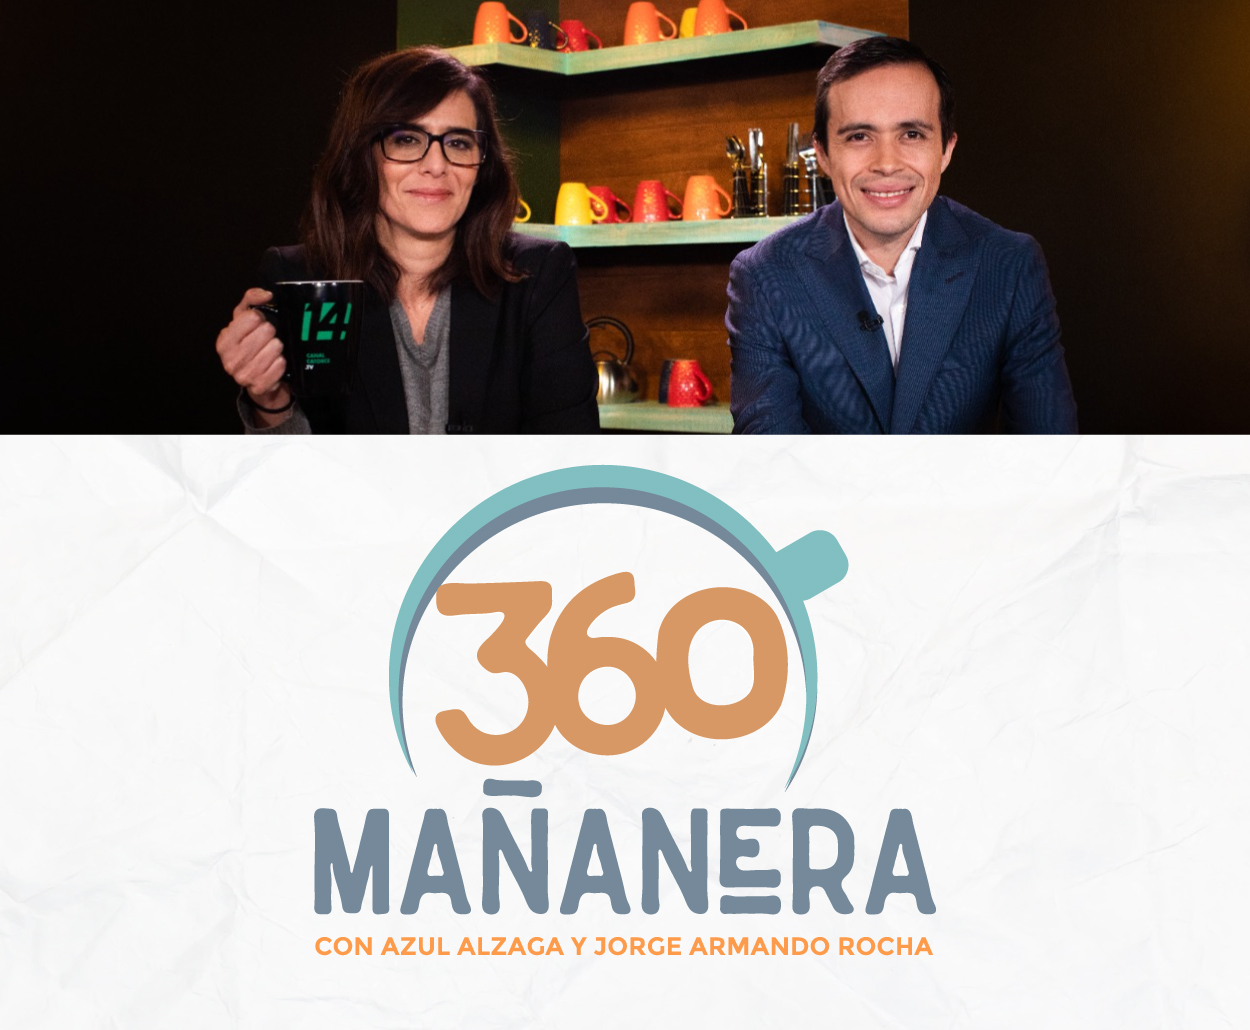 Canal Catorce del SPR estrena “<b>Mañanera 360</b>”, programa de revista informativa sobre la Conferencia Matutina Presidencial